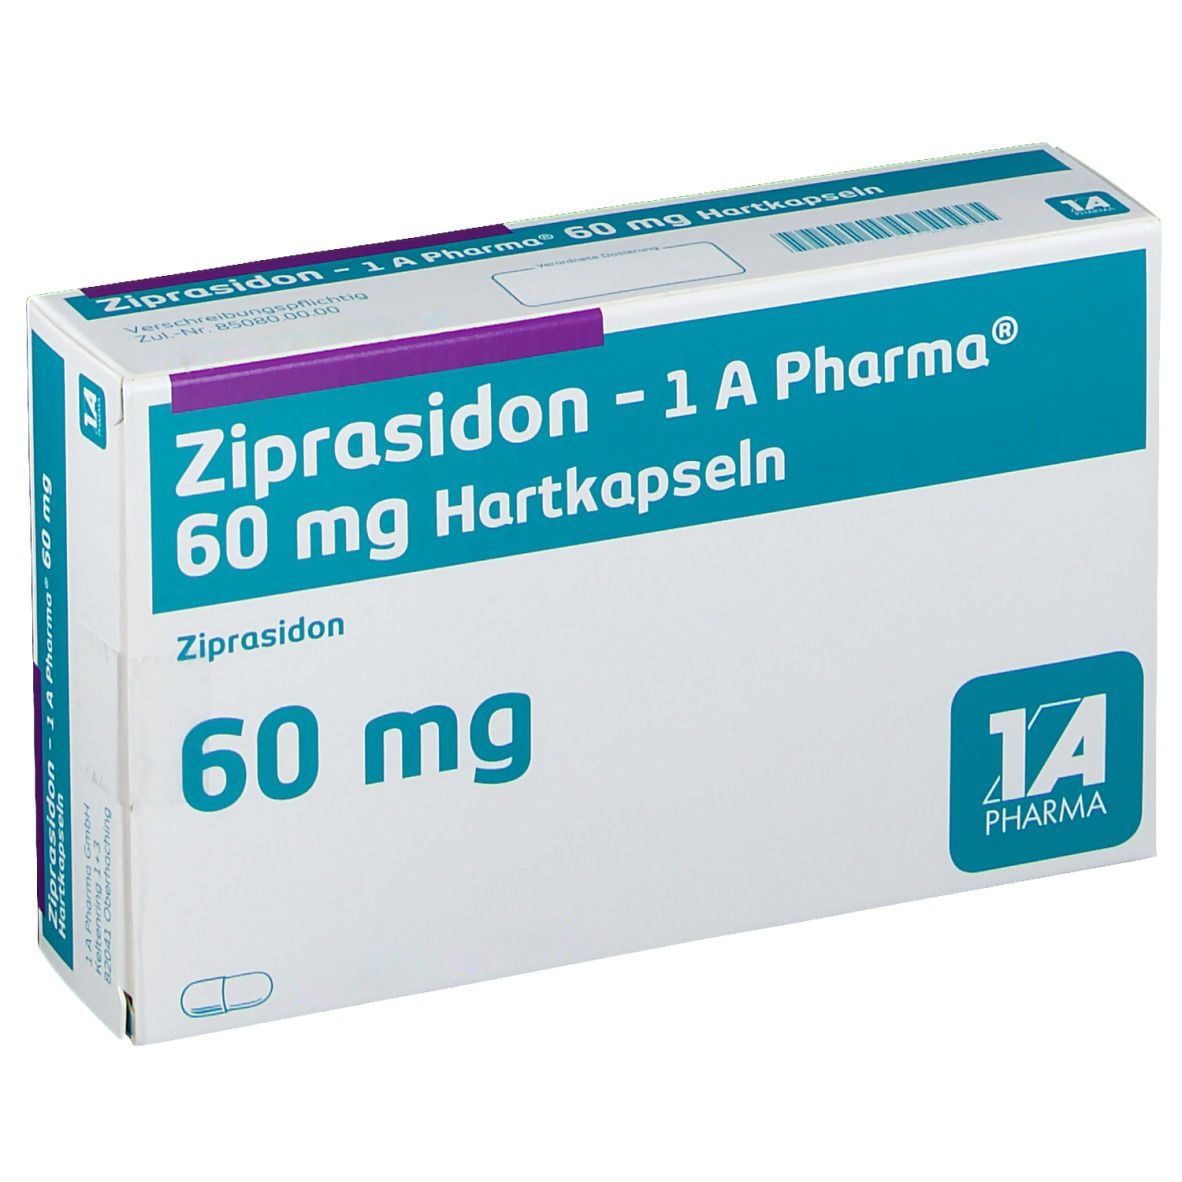 Ziprasidon - 1 A Pharma® 60 mg